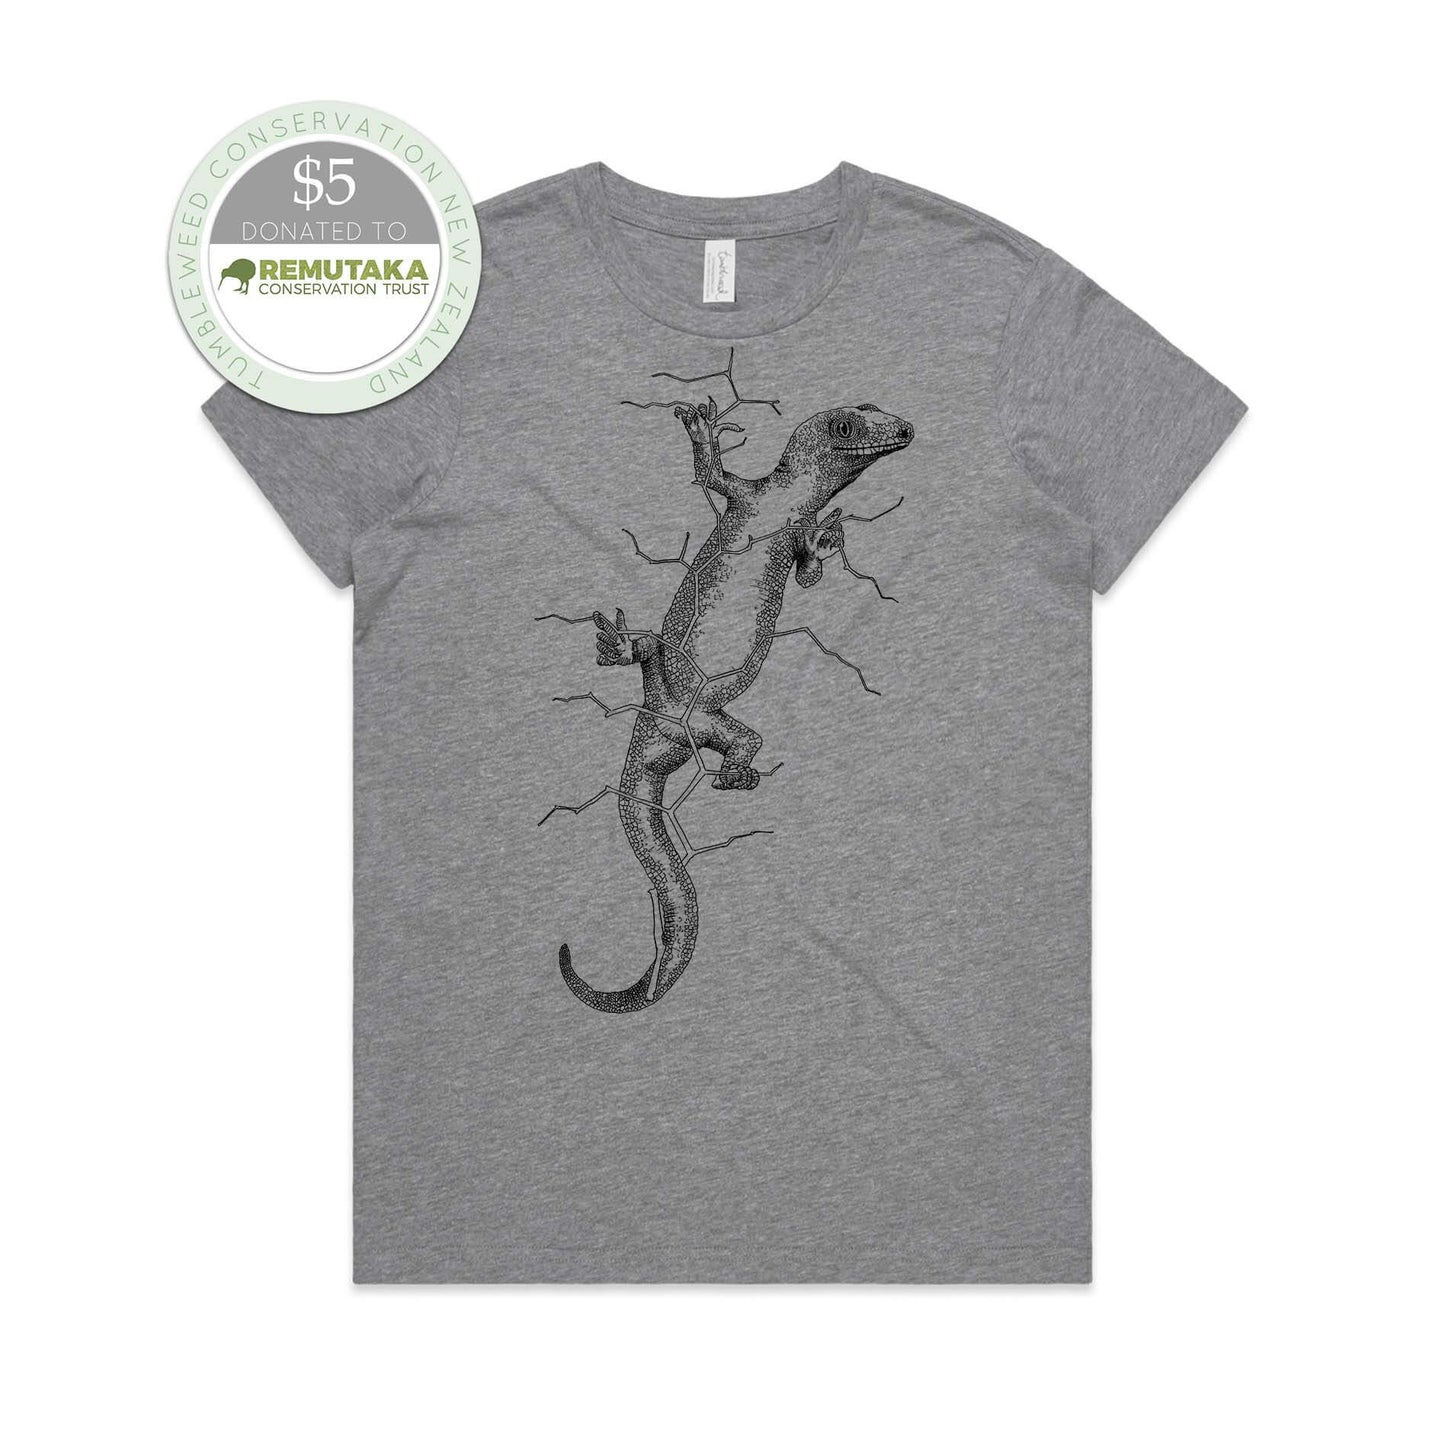 Grey marle, female t-shirt featuring a screen printed gecko design.